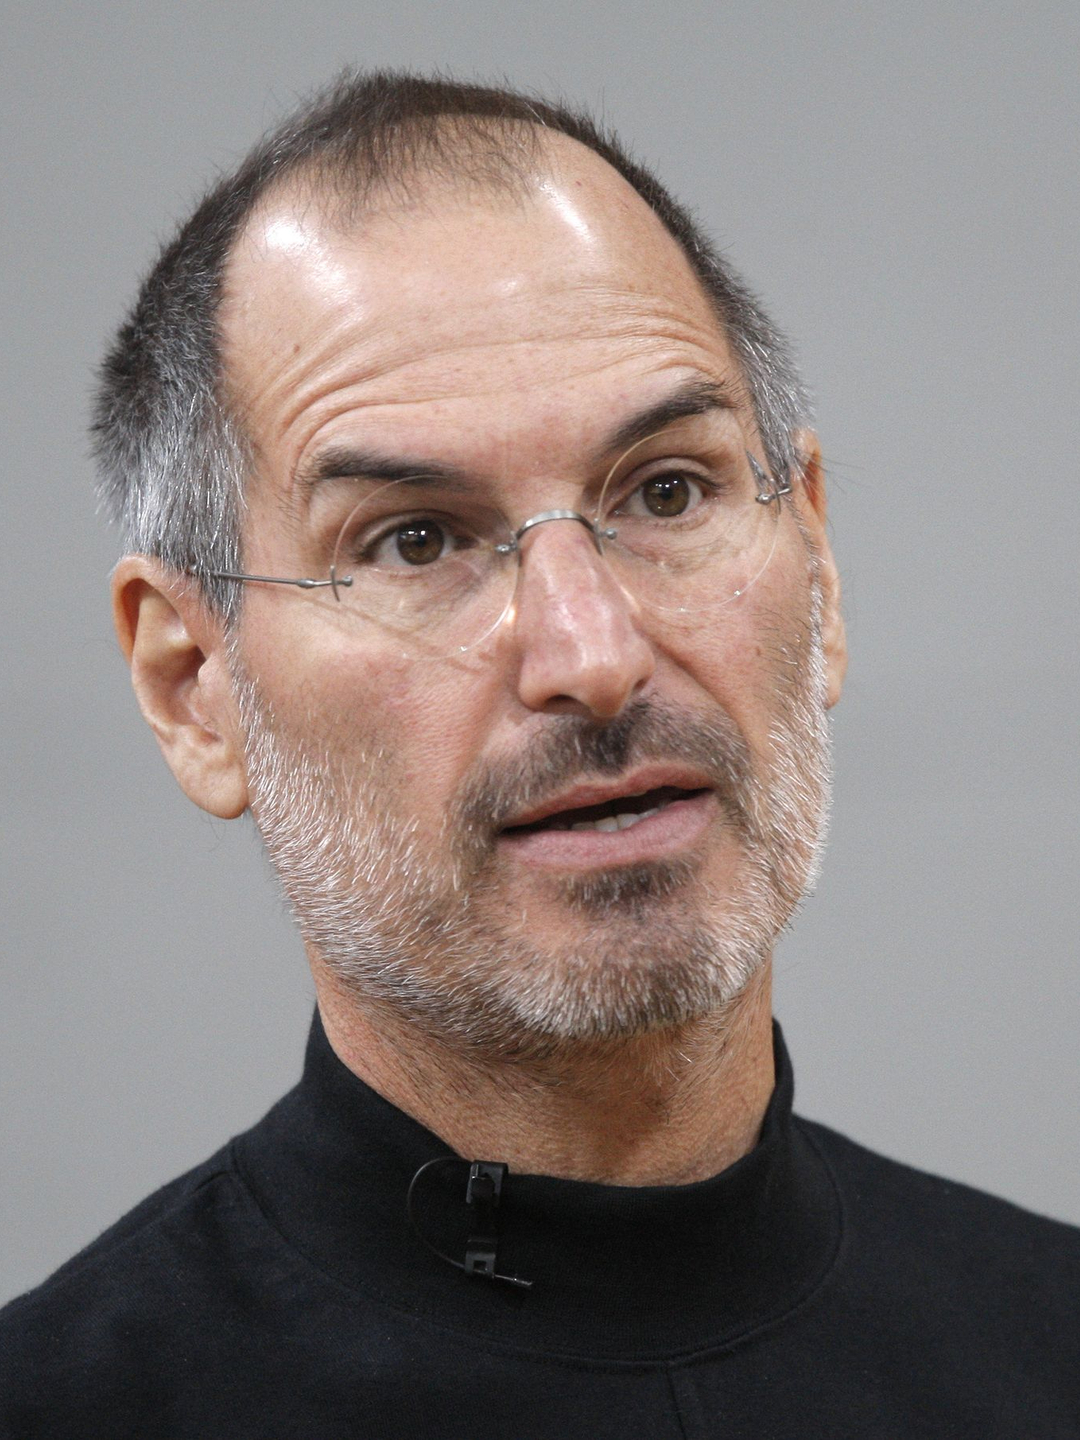 Steve Jobs way to success